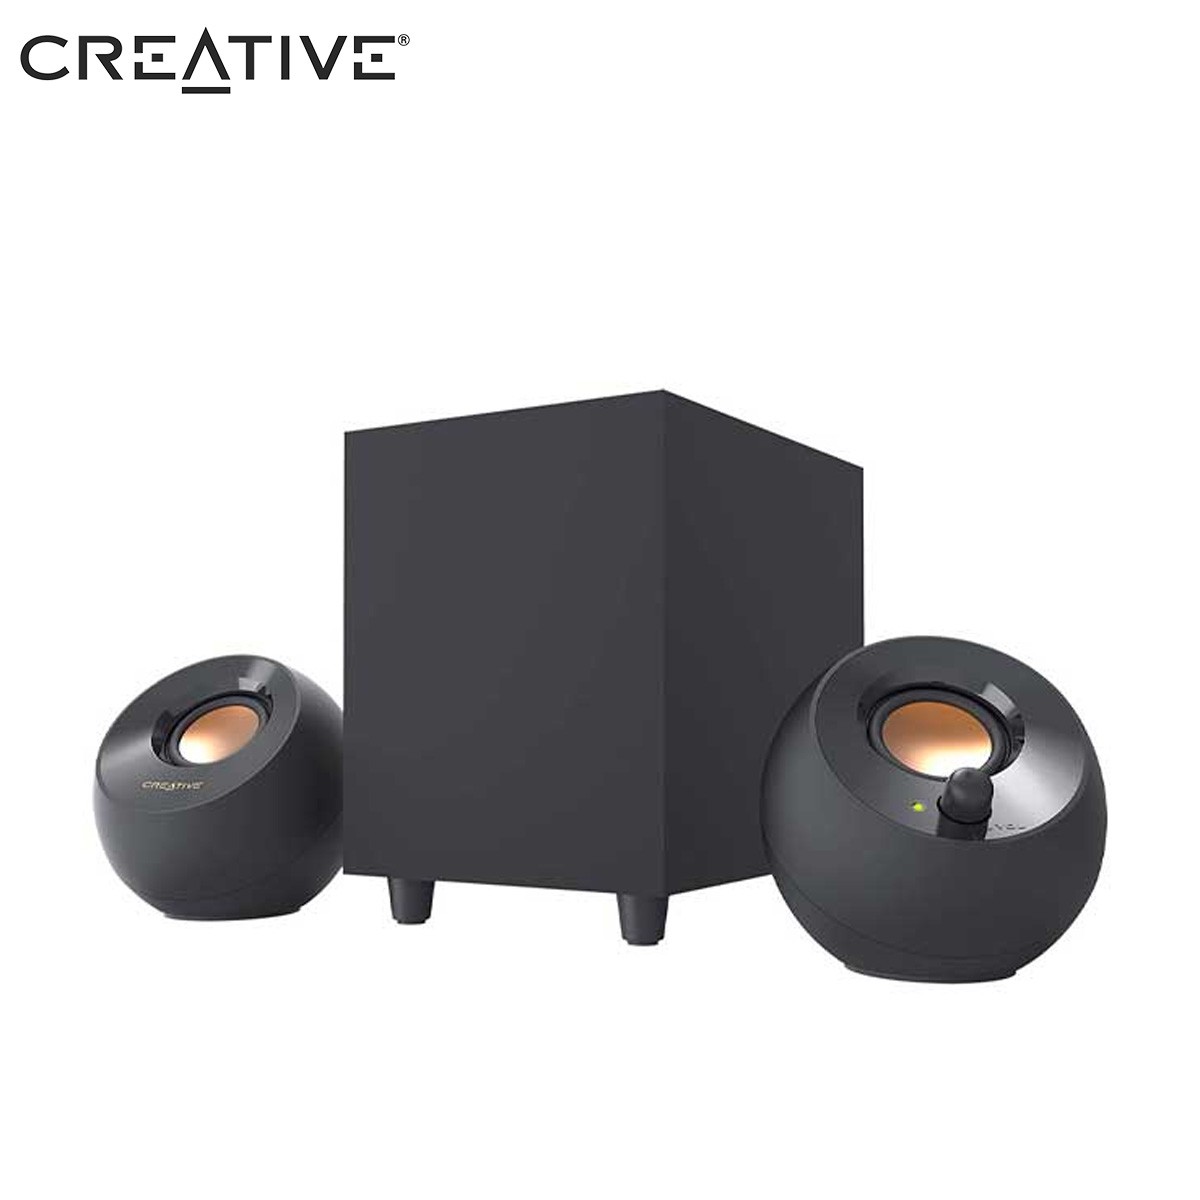 CREATIVE PEBBLE PLUS 2.1 USB Desktop Subwoofer Speaker System BLACK MODEL: MF0480